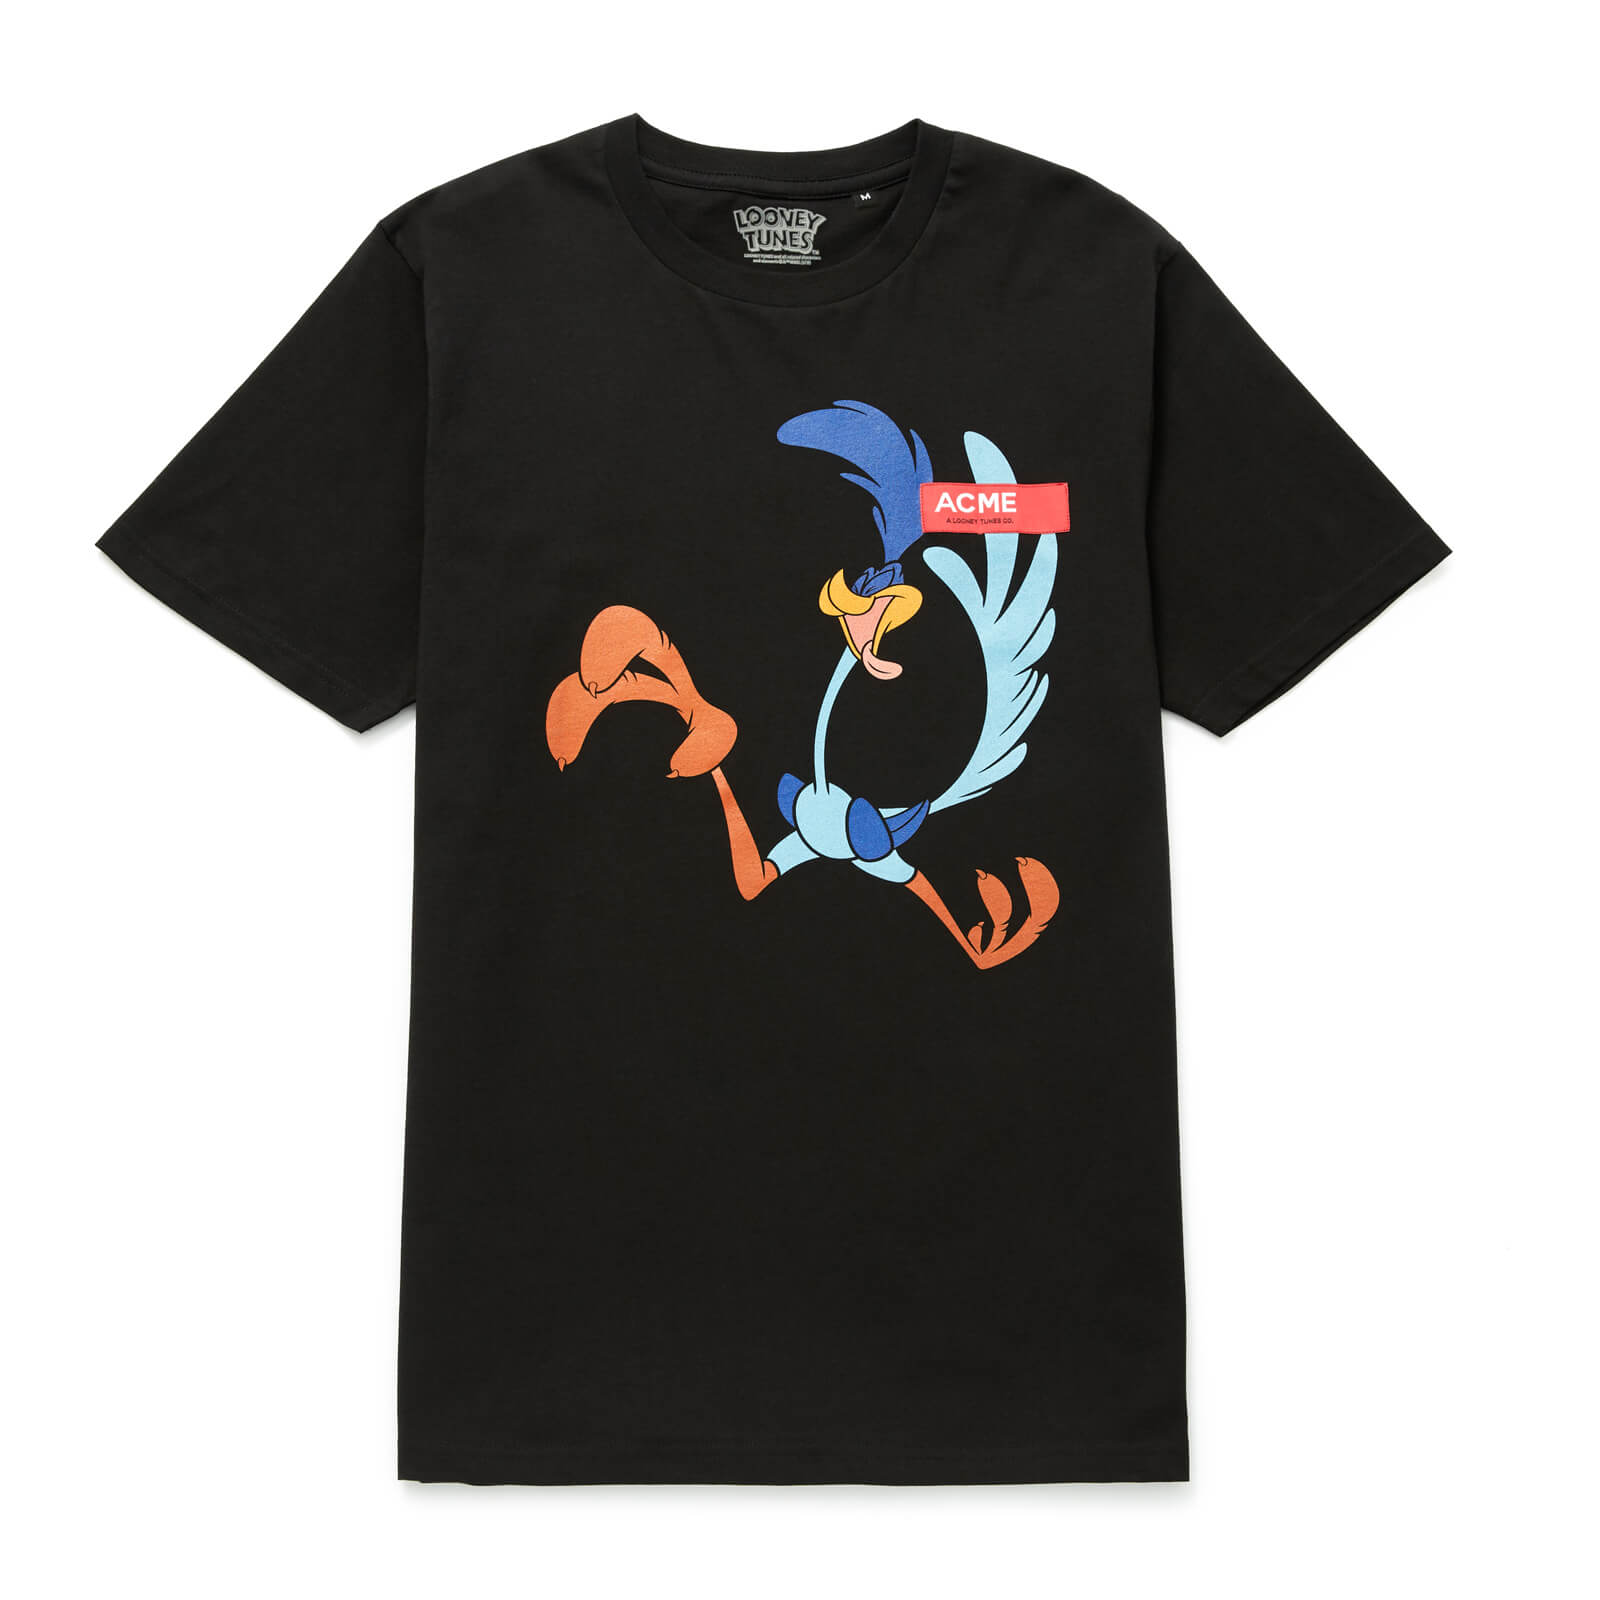 Looney Tunes ACME Capsule Road Runner Joy T-Shirt - Black - M - Black